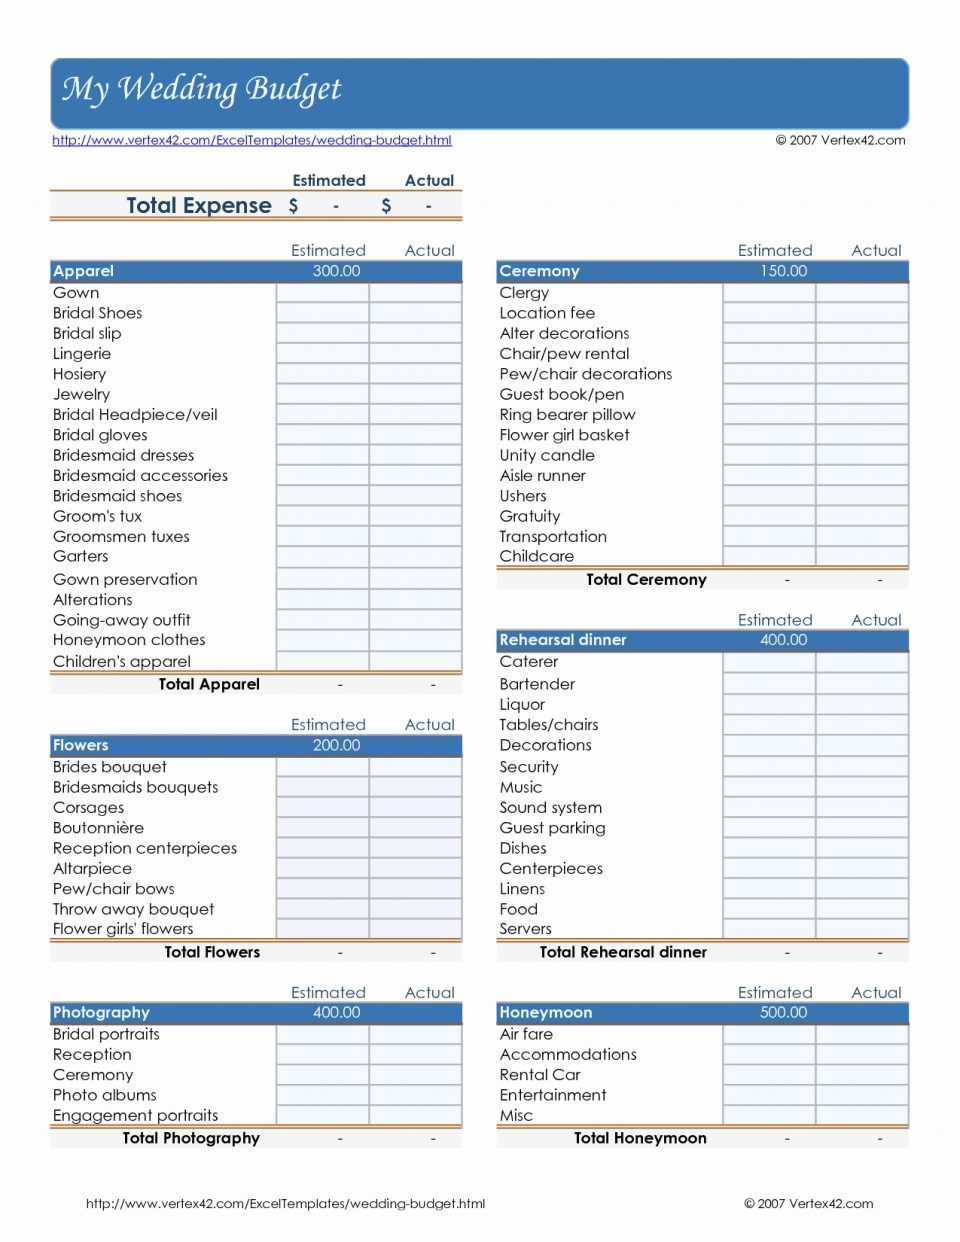 wedding-spreadsheet-uk-within-wedding-budget-excel-spreadsheet-examples